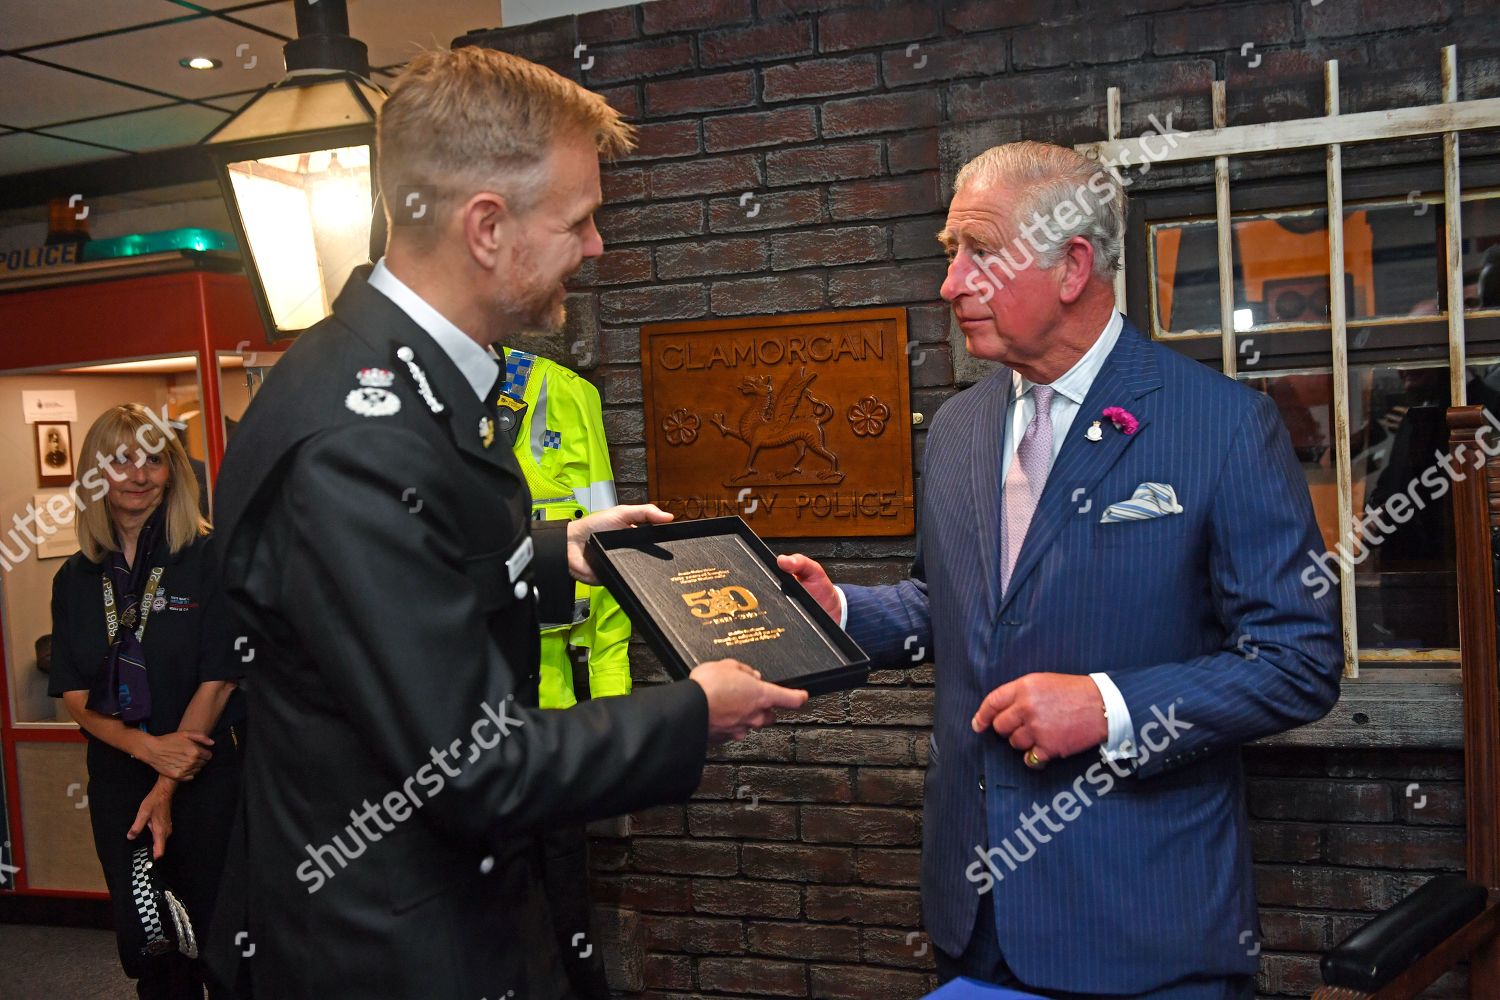 prince-charles-visit-to-wales-uk-shutterstock-editorial-10326139k.jpg